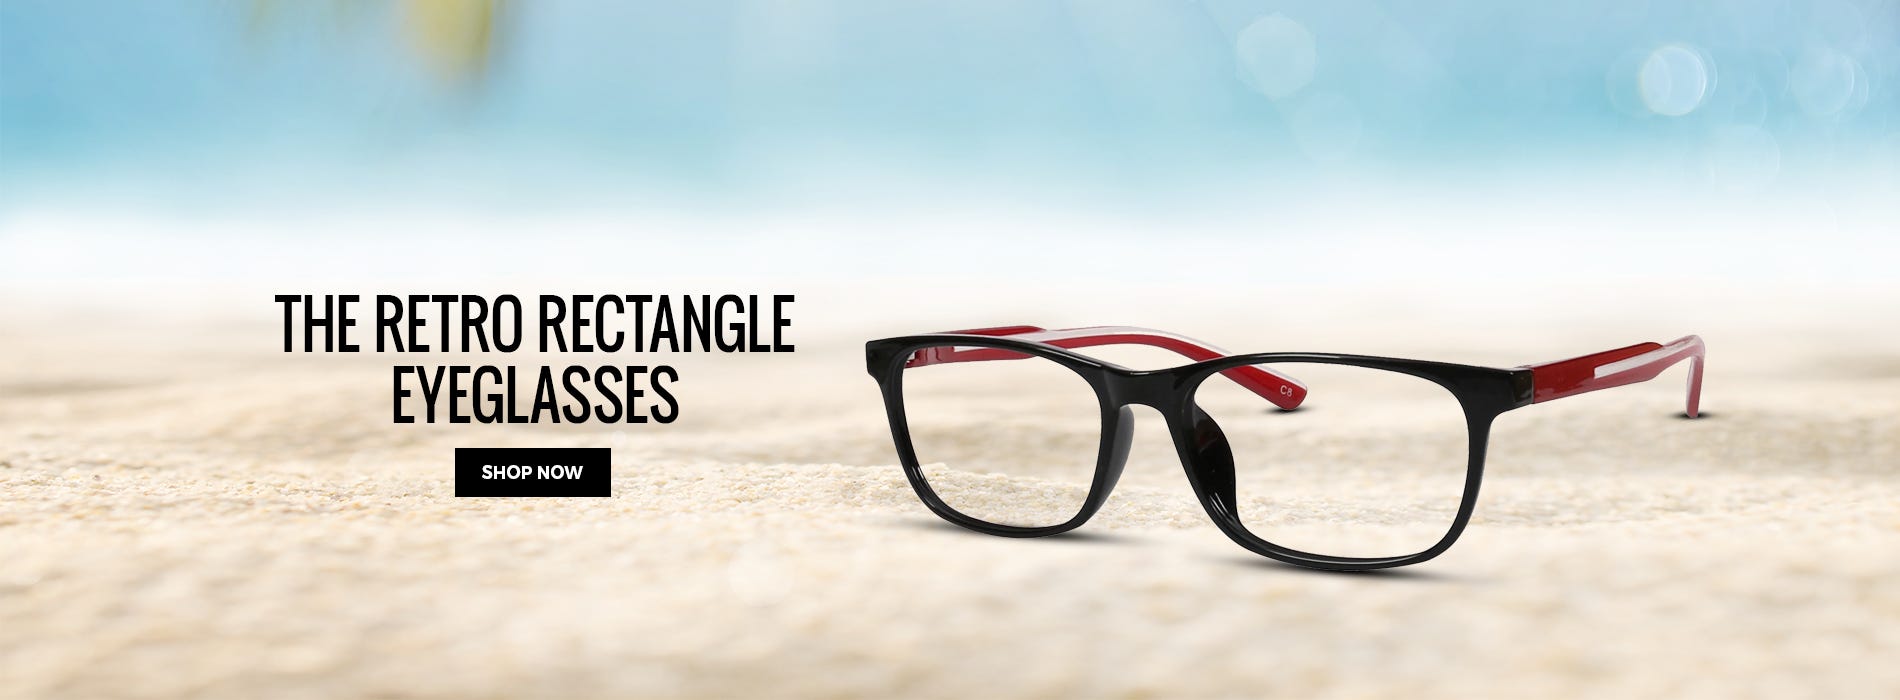 The Retro Rectangle Eyeglasses